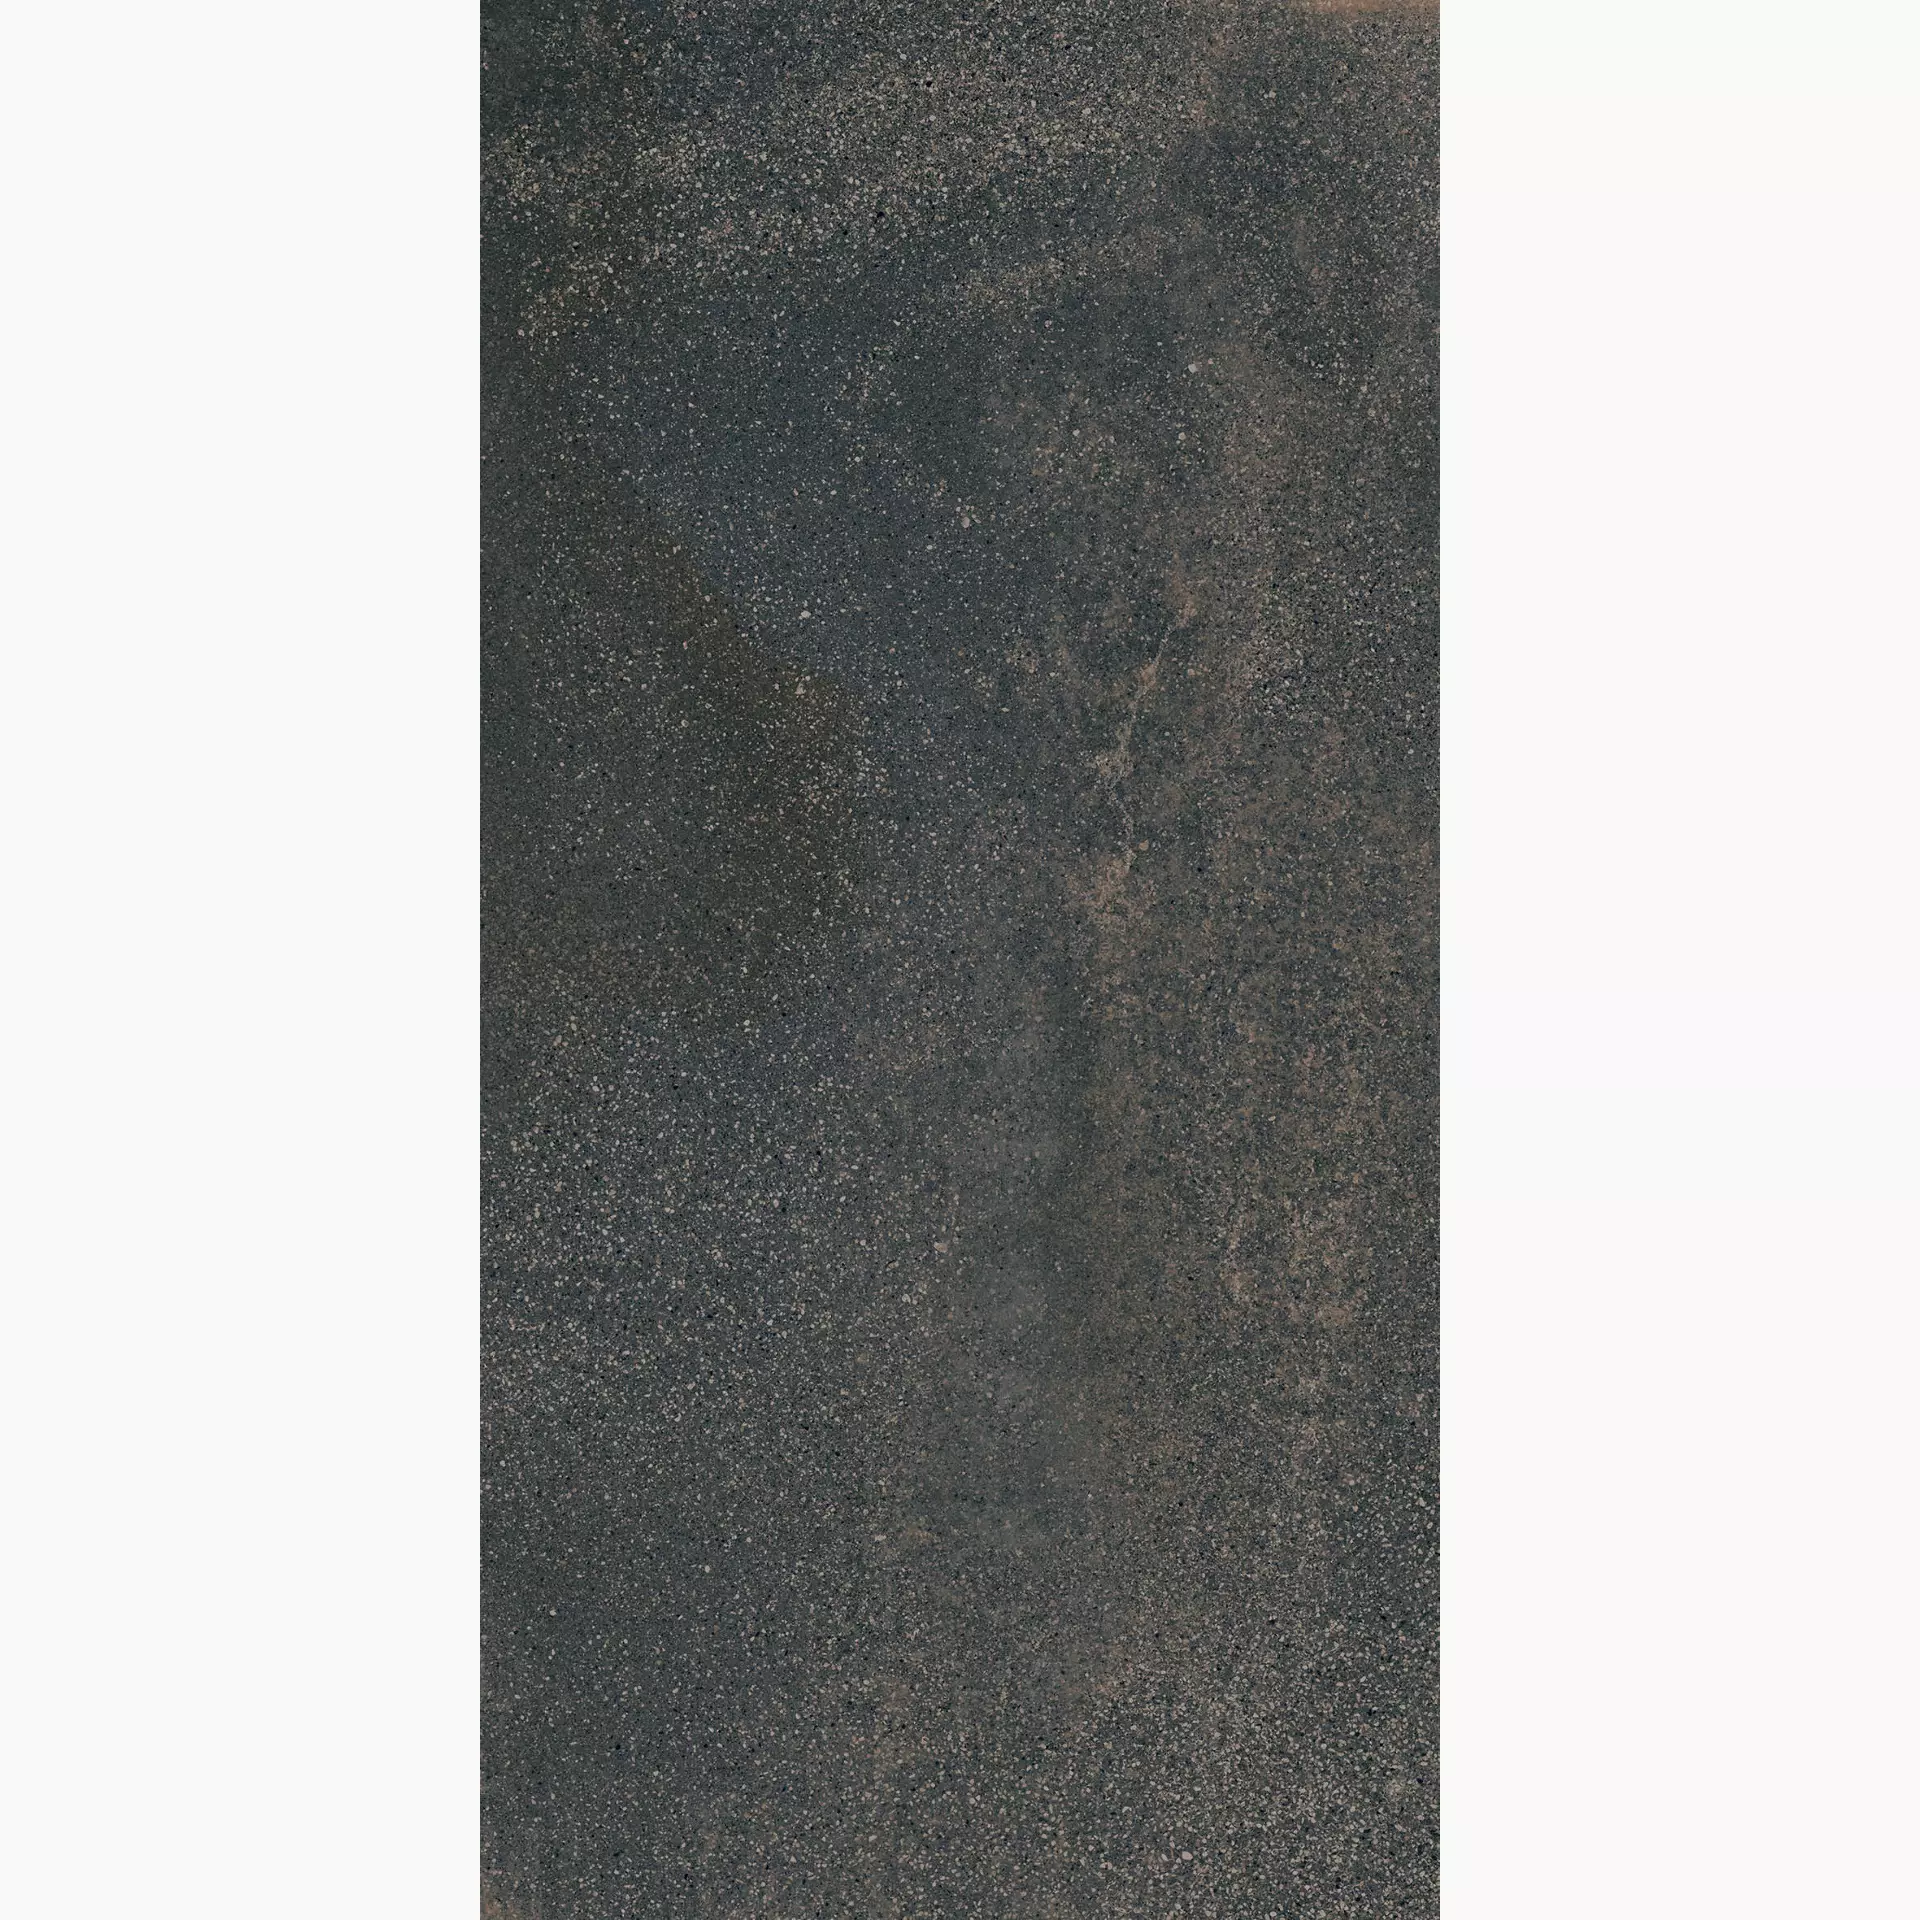 ABK Blend Concrete Iron Naturale PF60008260 30x60cm rectified 8,5mm